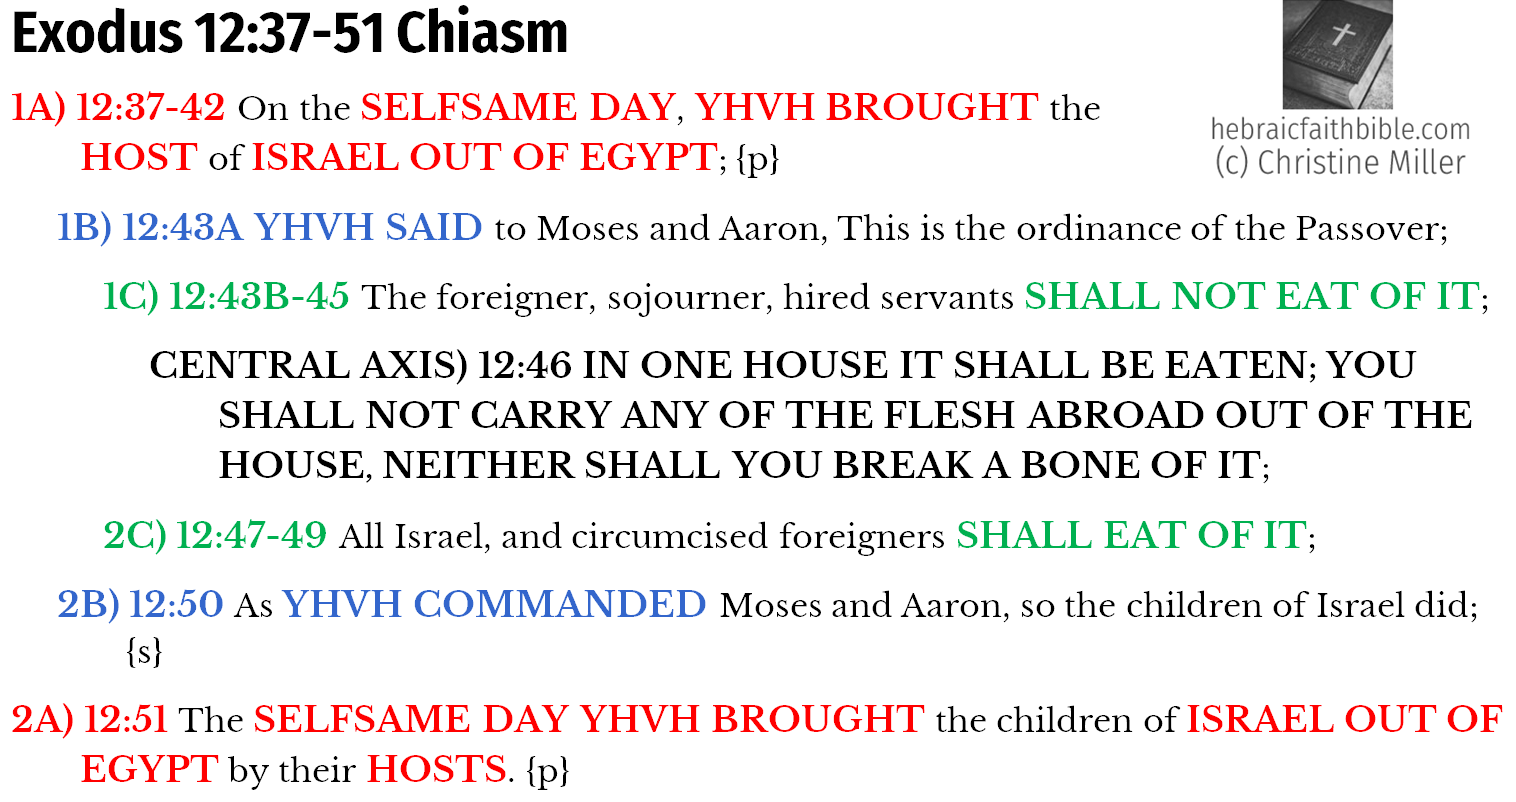 Exo 12:37-51 Chiasm | hebraicfaithbible.com